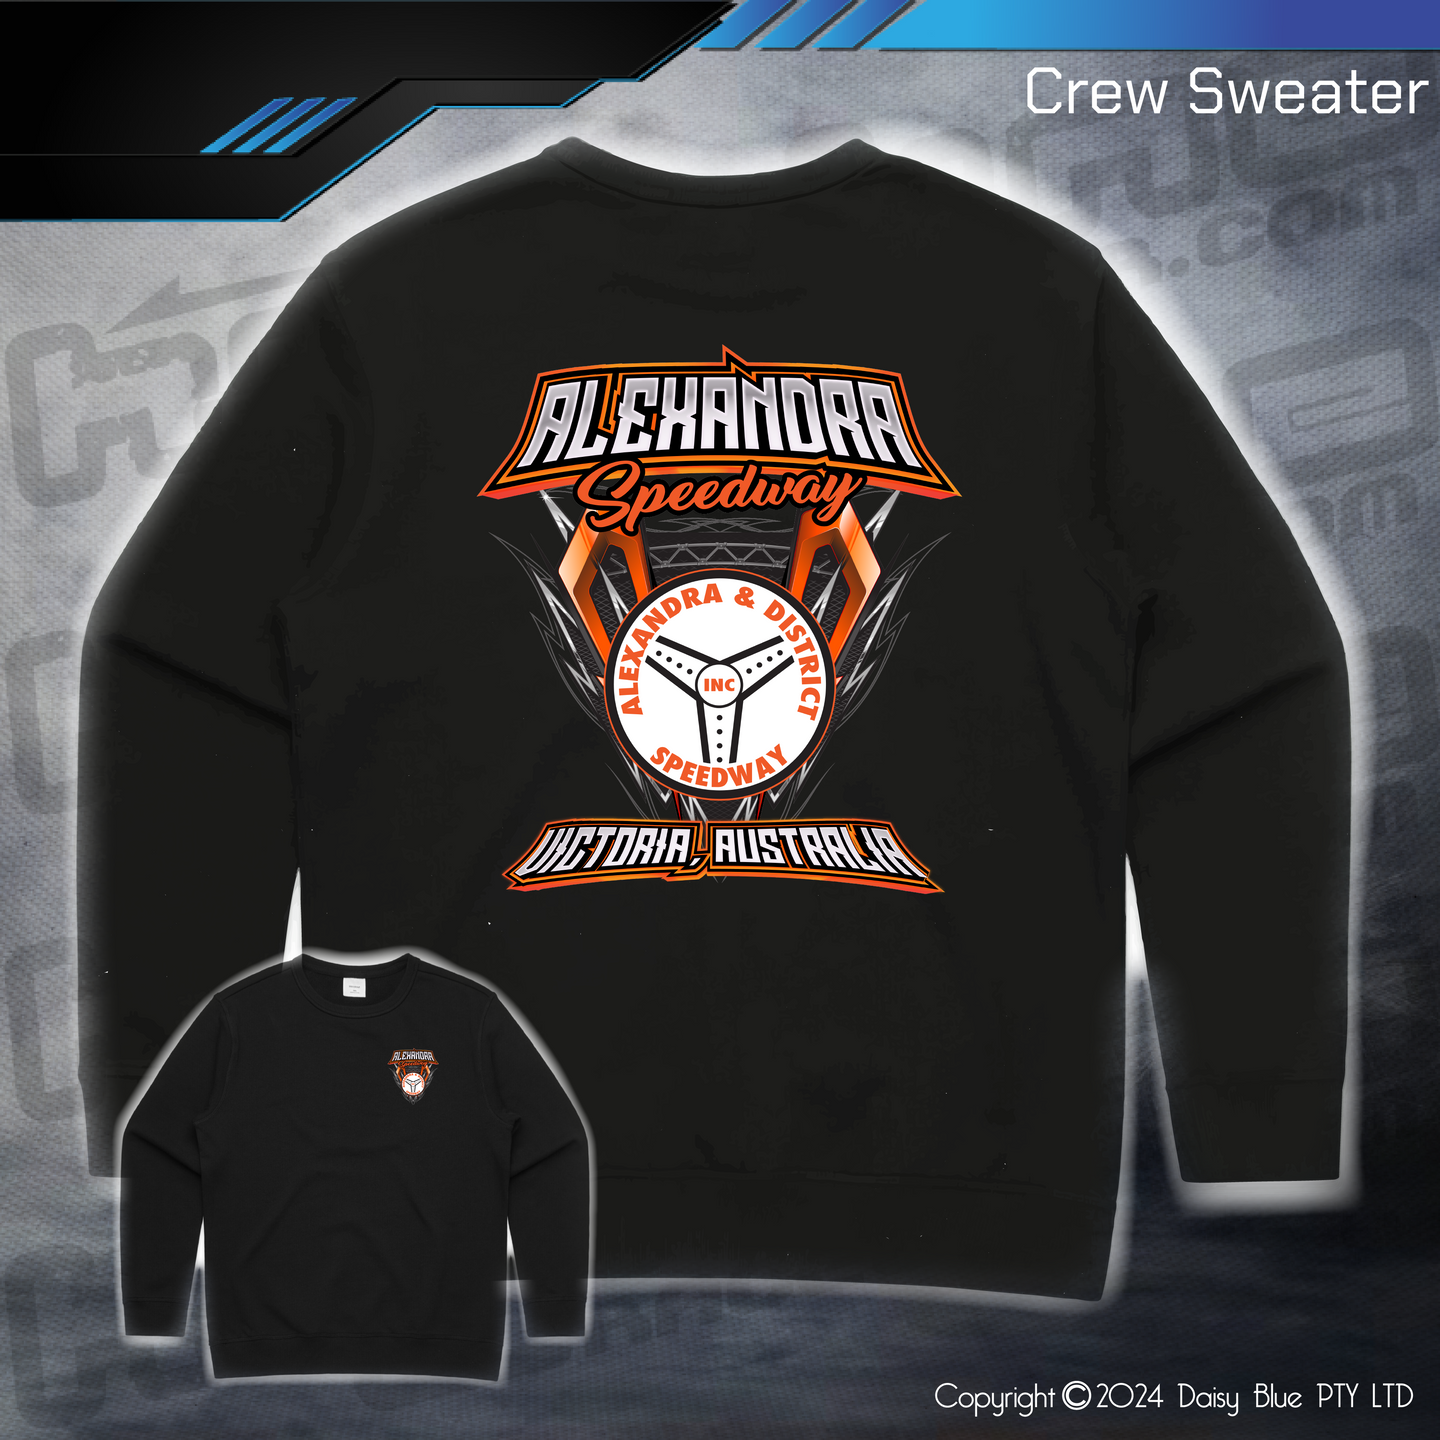 Crew Sweater - Alexandra Speedway